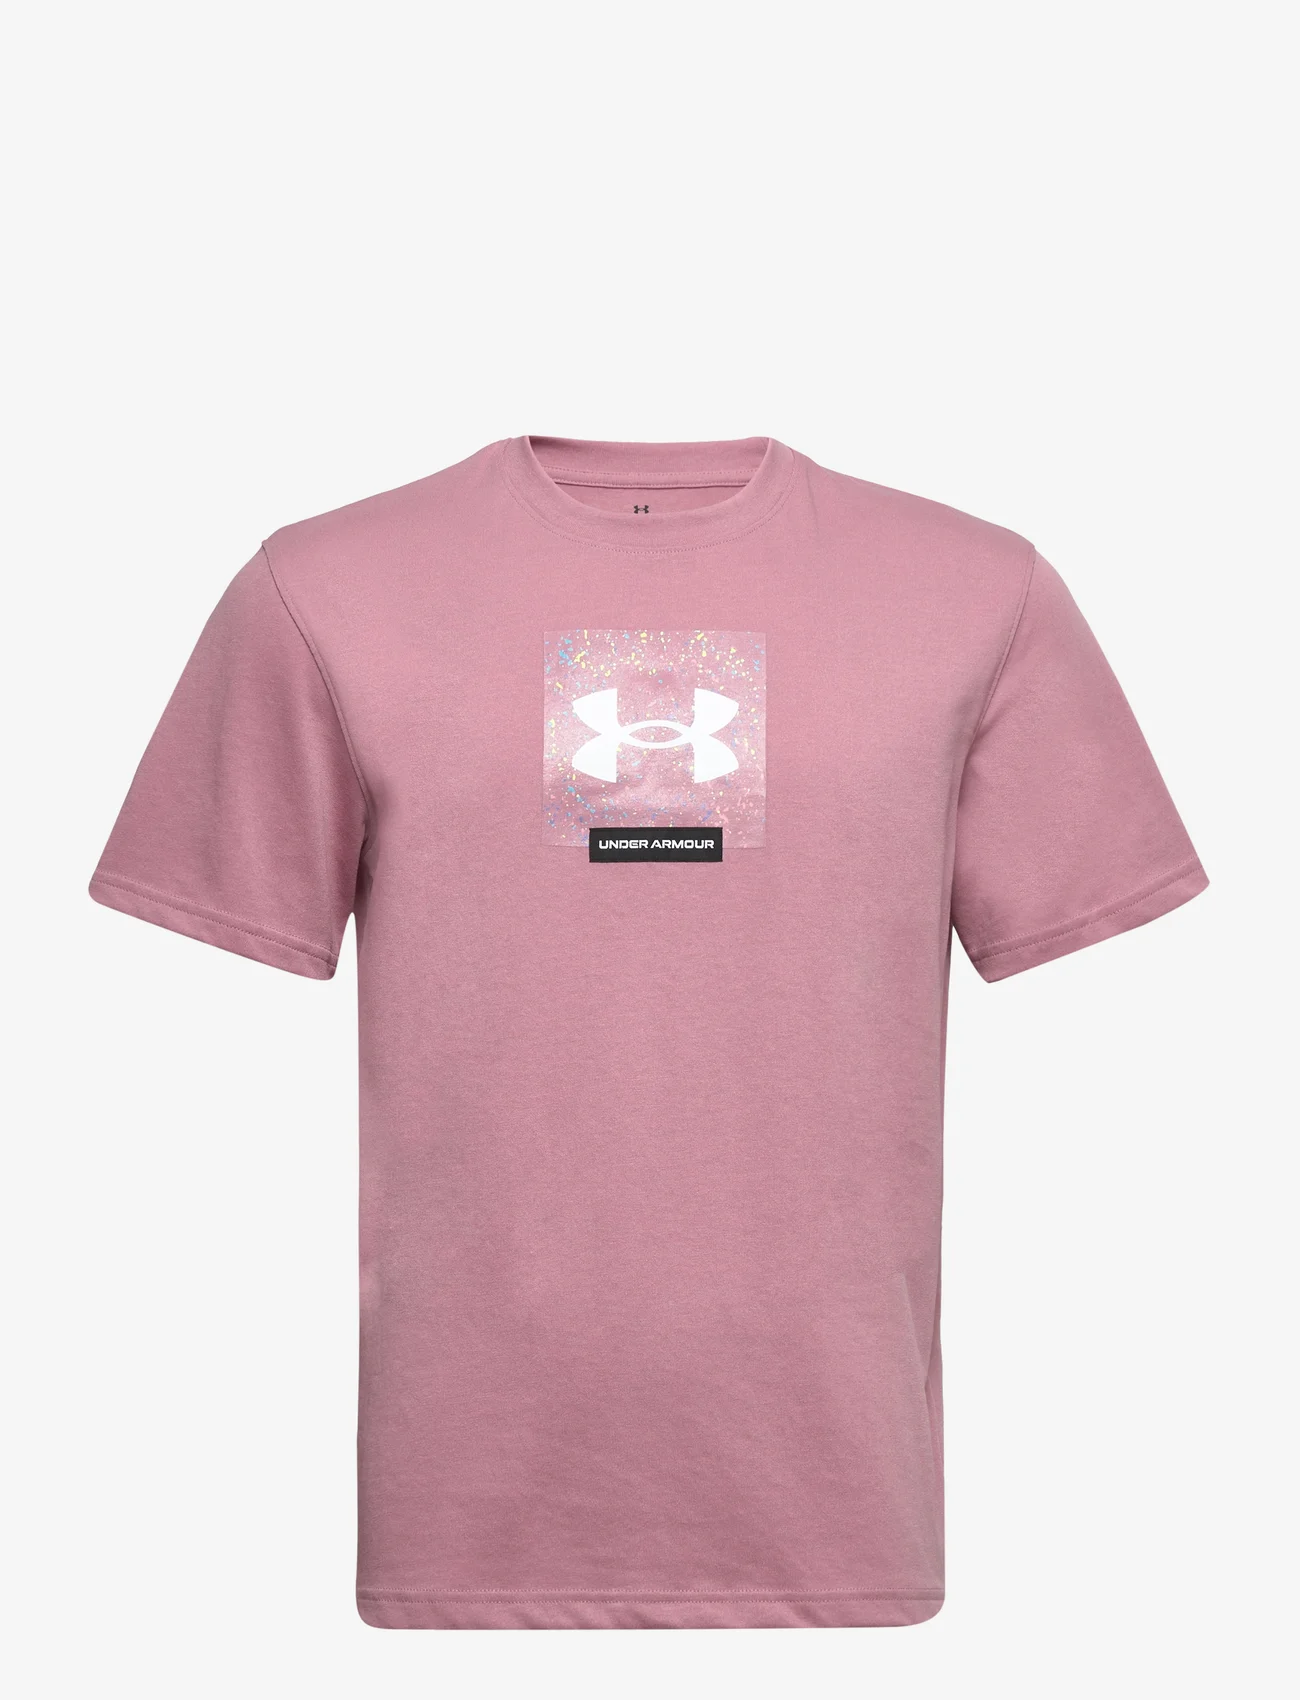 Under Armour - UA BOXED HEAVYWEIGHT SS - t-shirts - pink elixir - 0